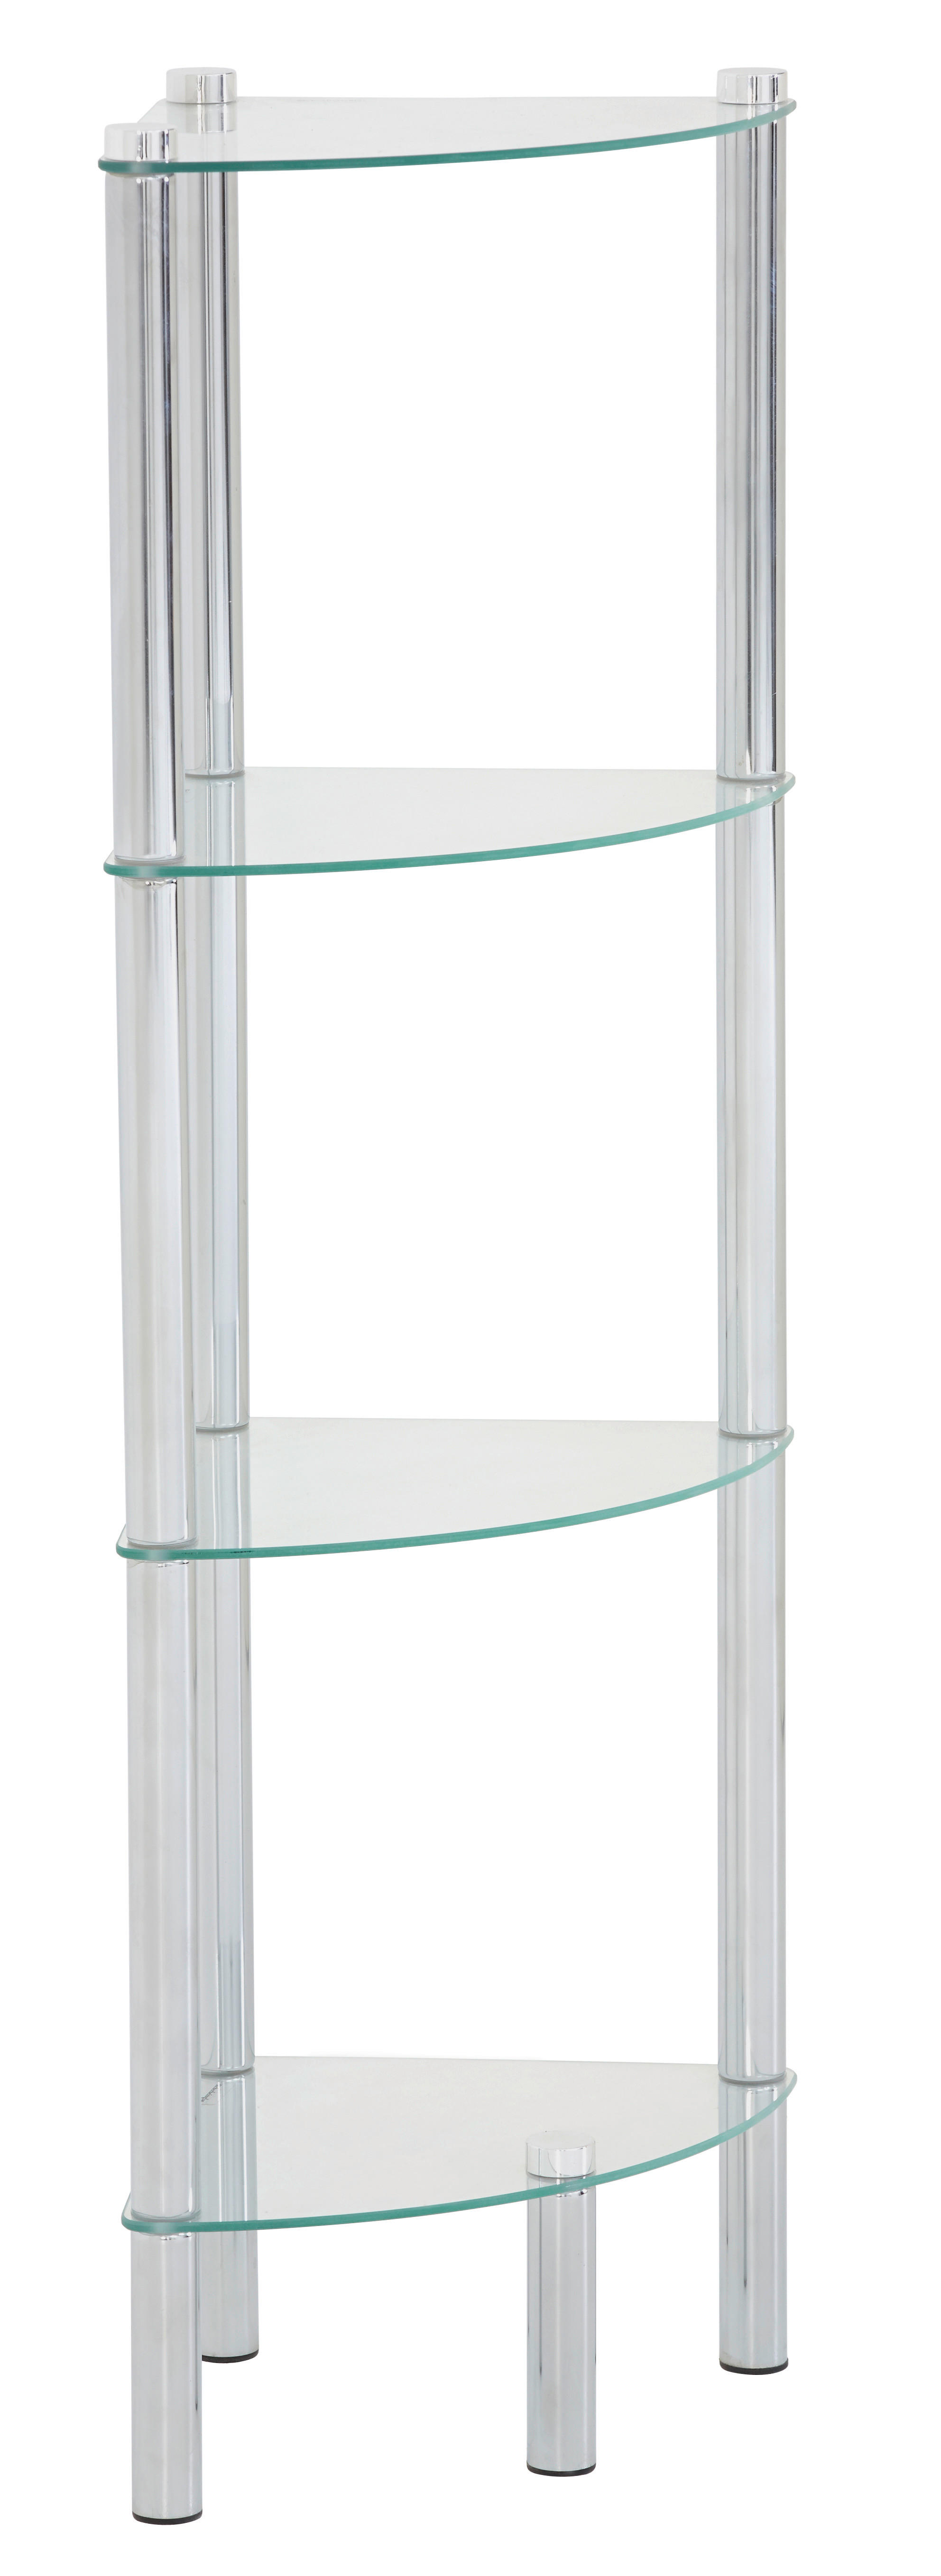 BADEZIMMERREGAL 30/104/30 cm  - Chromfarben, Basics, Glas/Metall (30/104/30cm) - Wenko